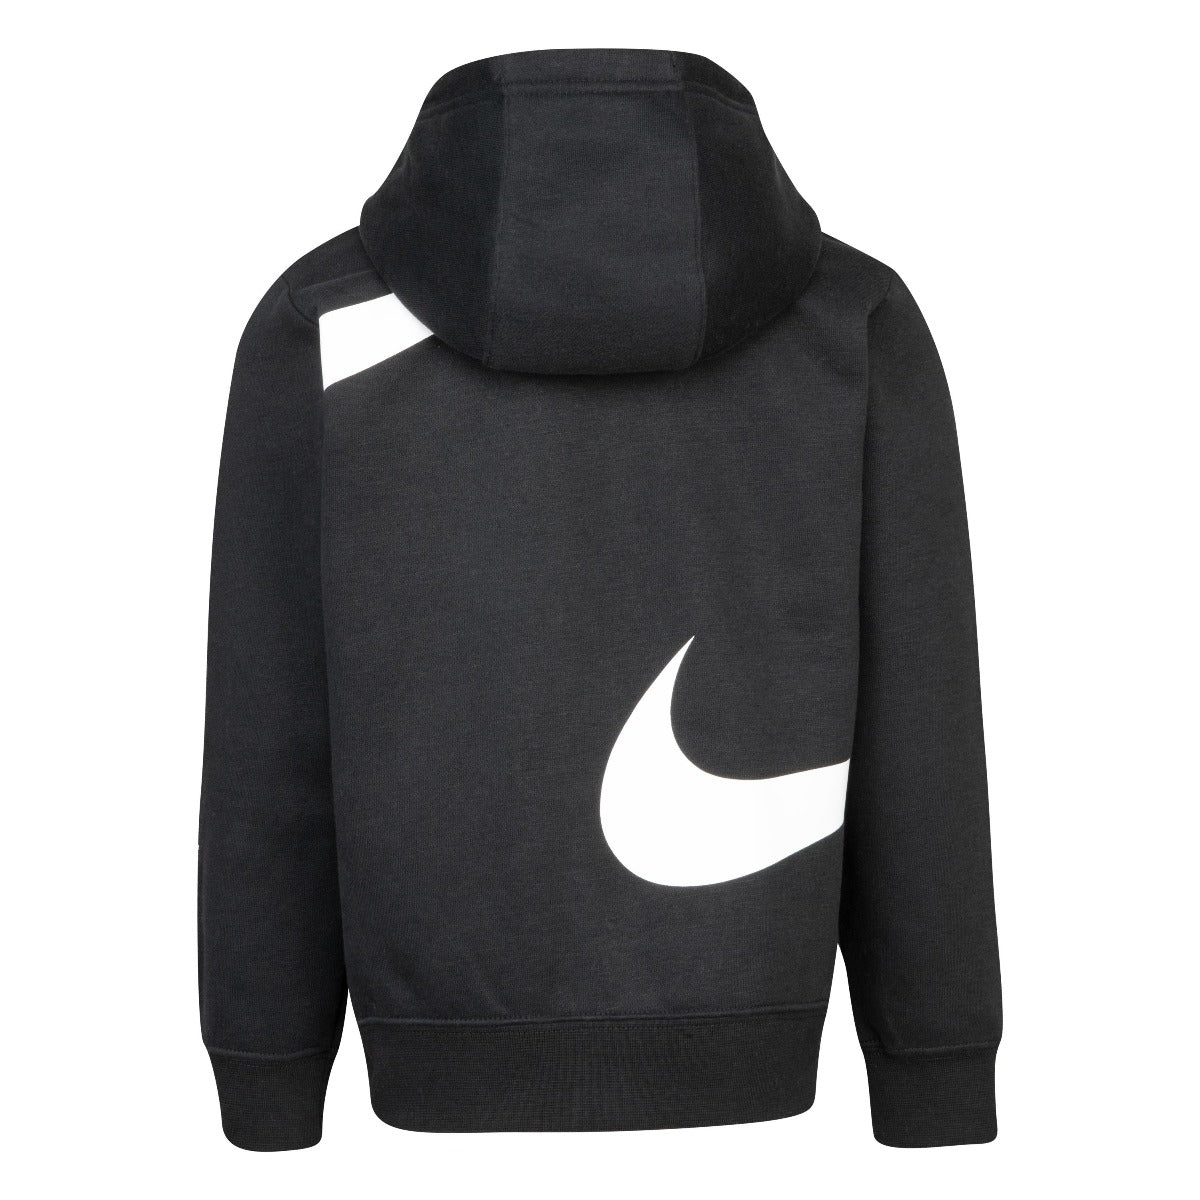 Nike Swoosh Hooded Jacket Kids - Black/White